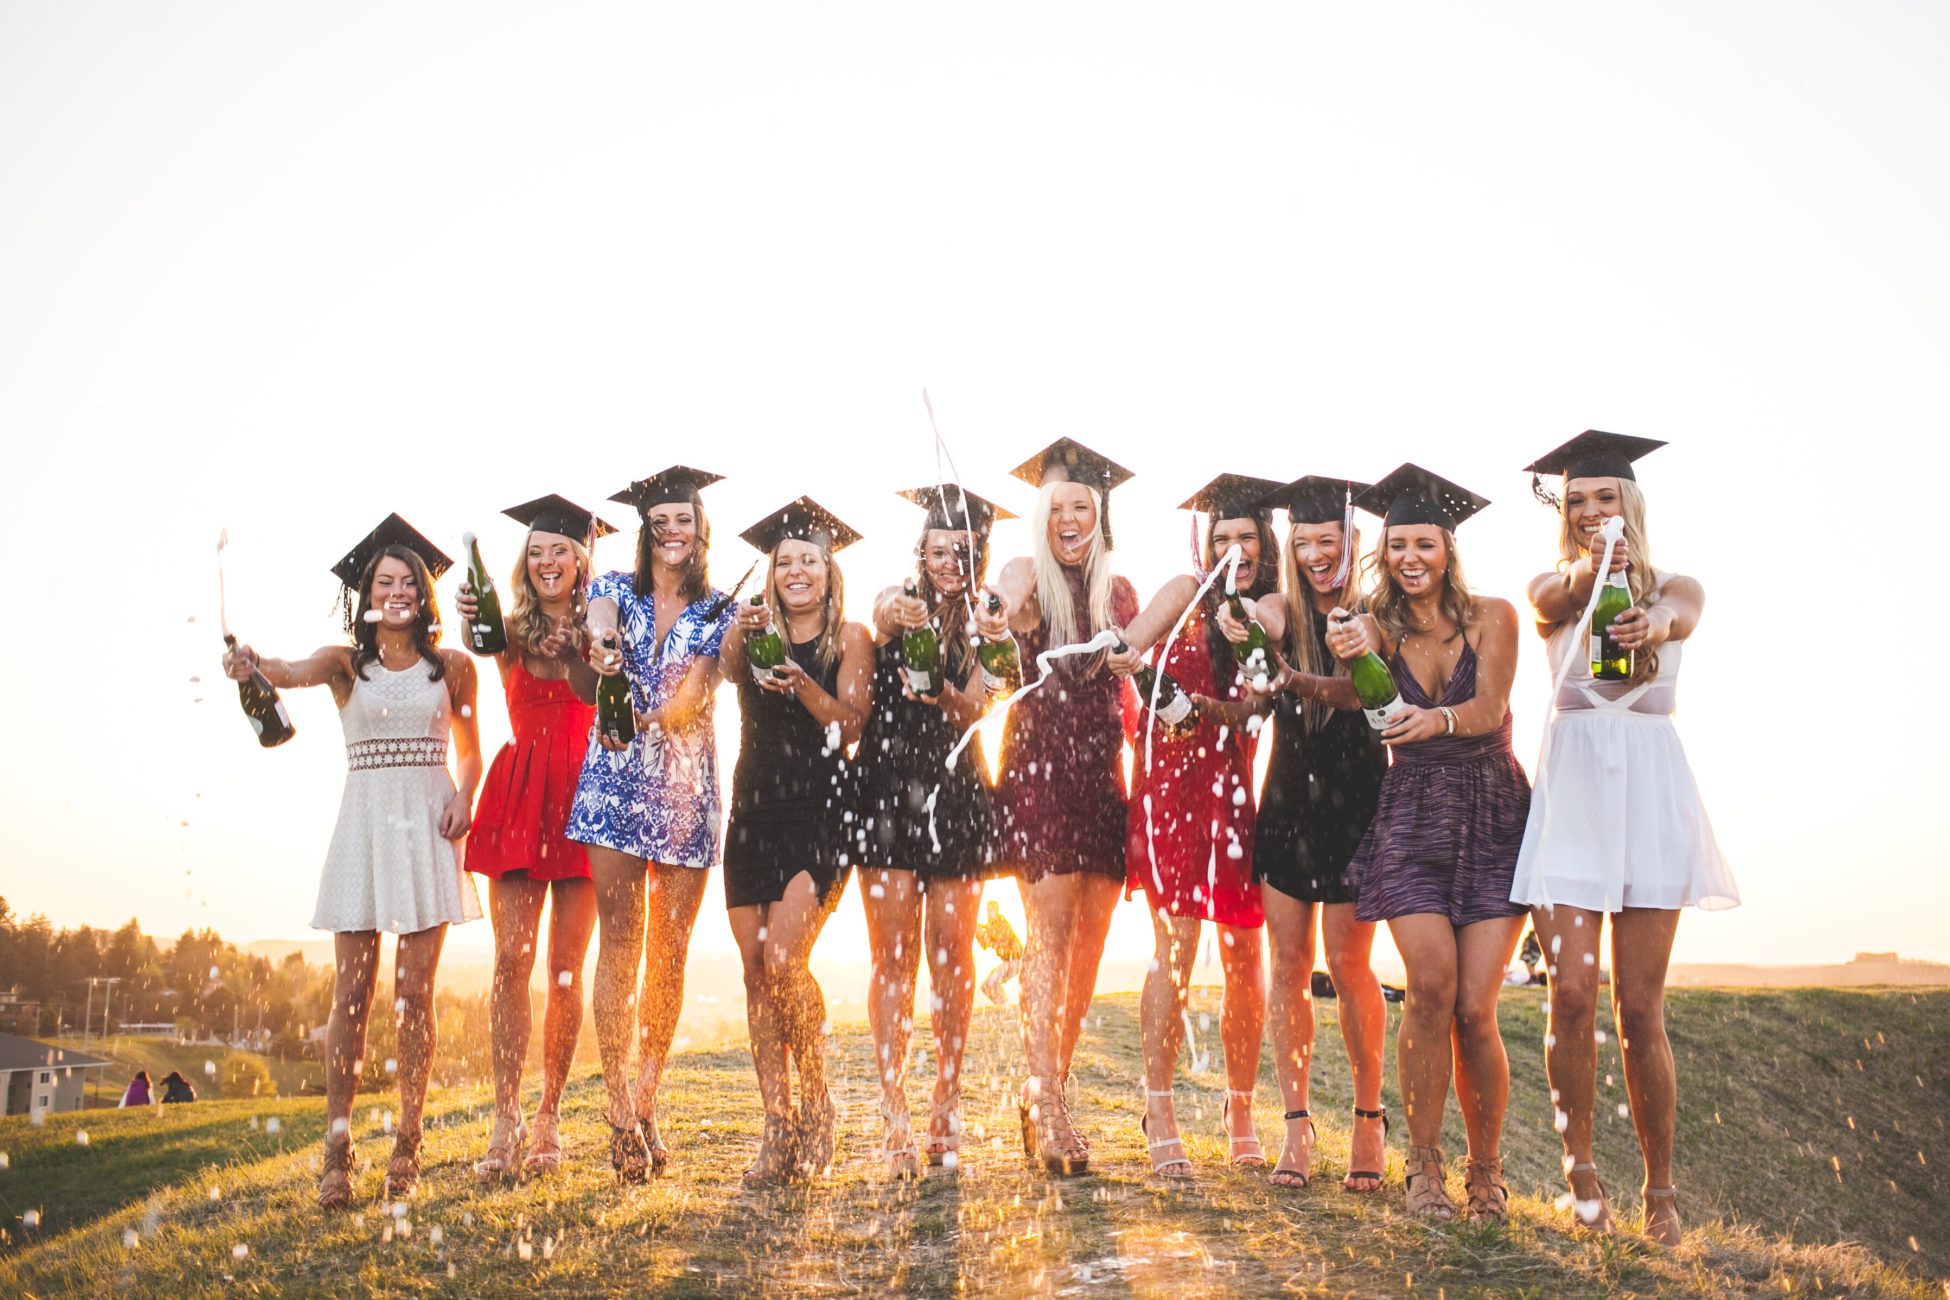 group of girls celebrating graduation - graduation party ideas